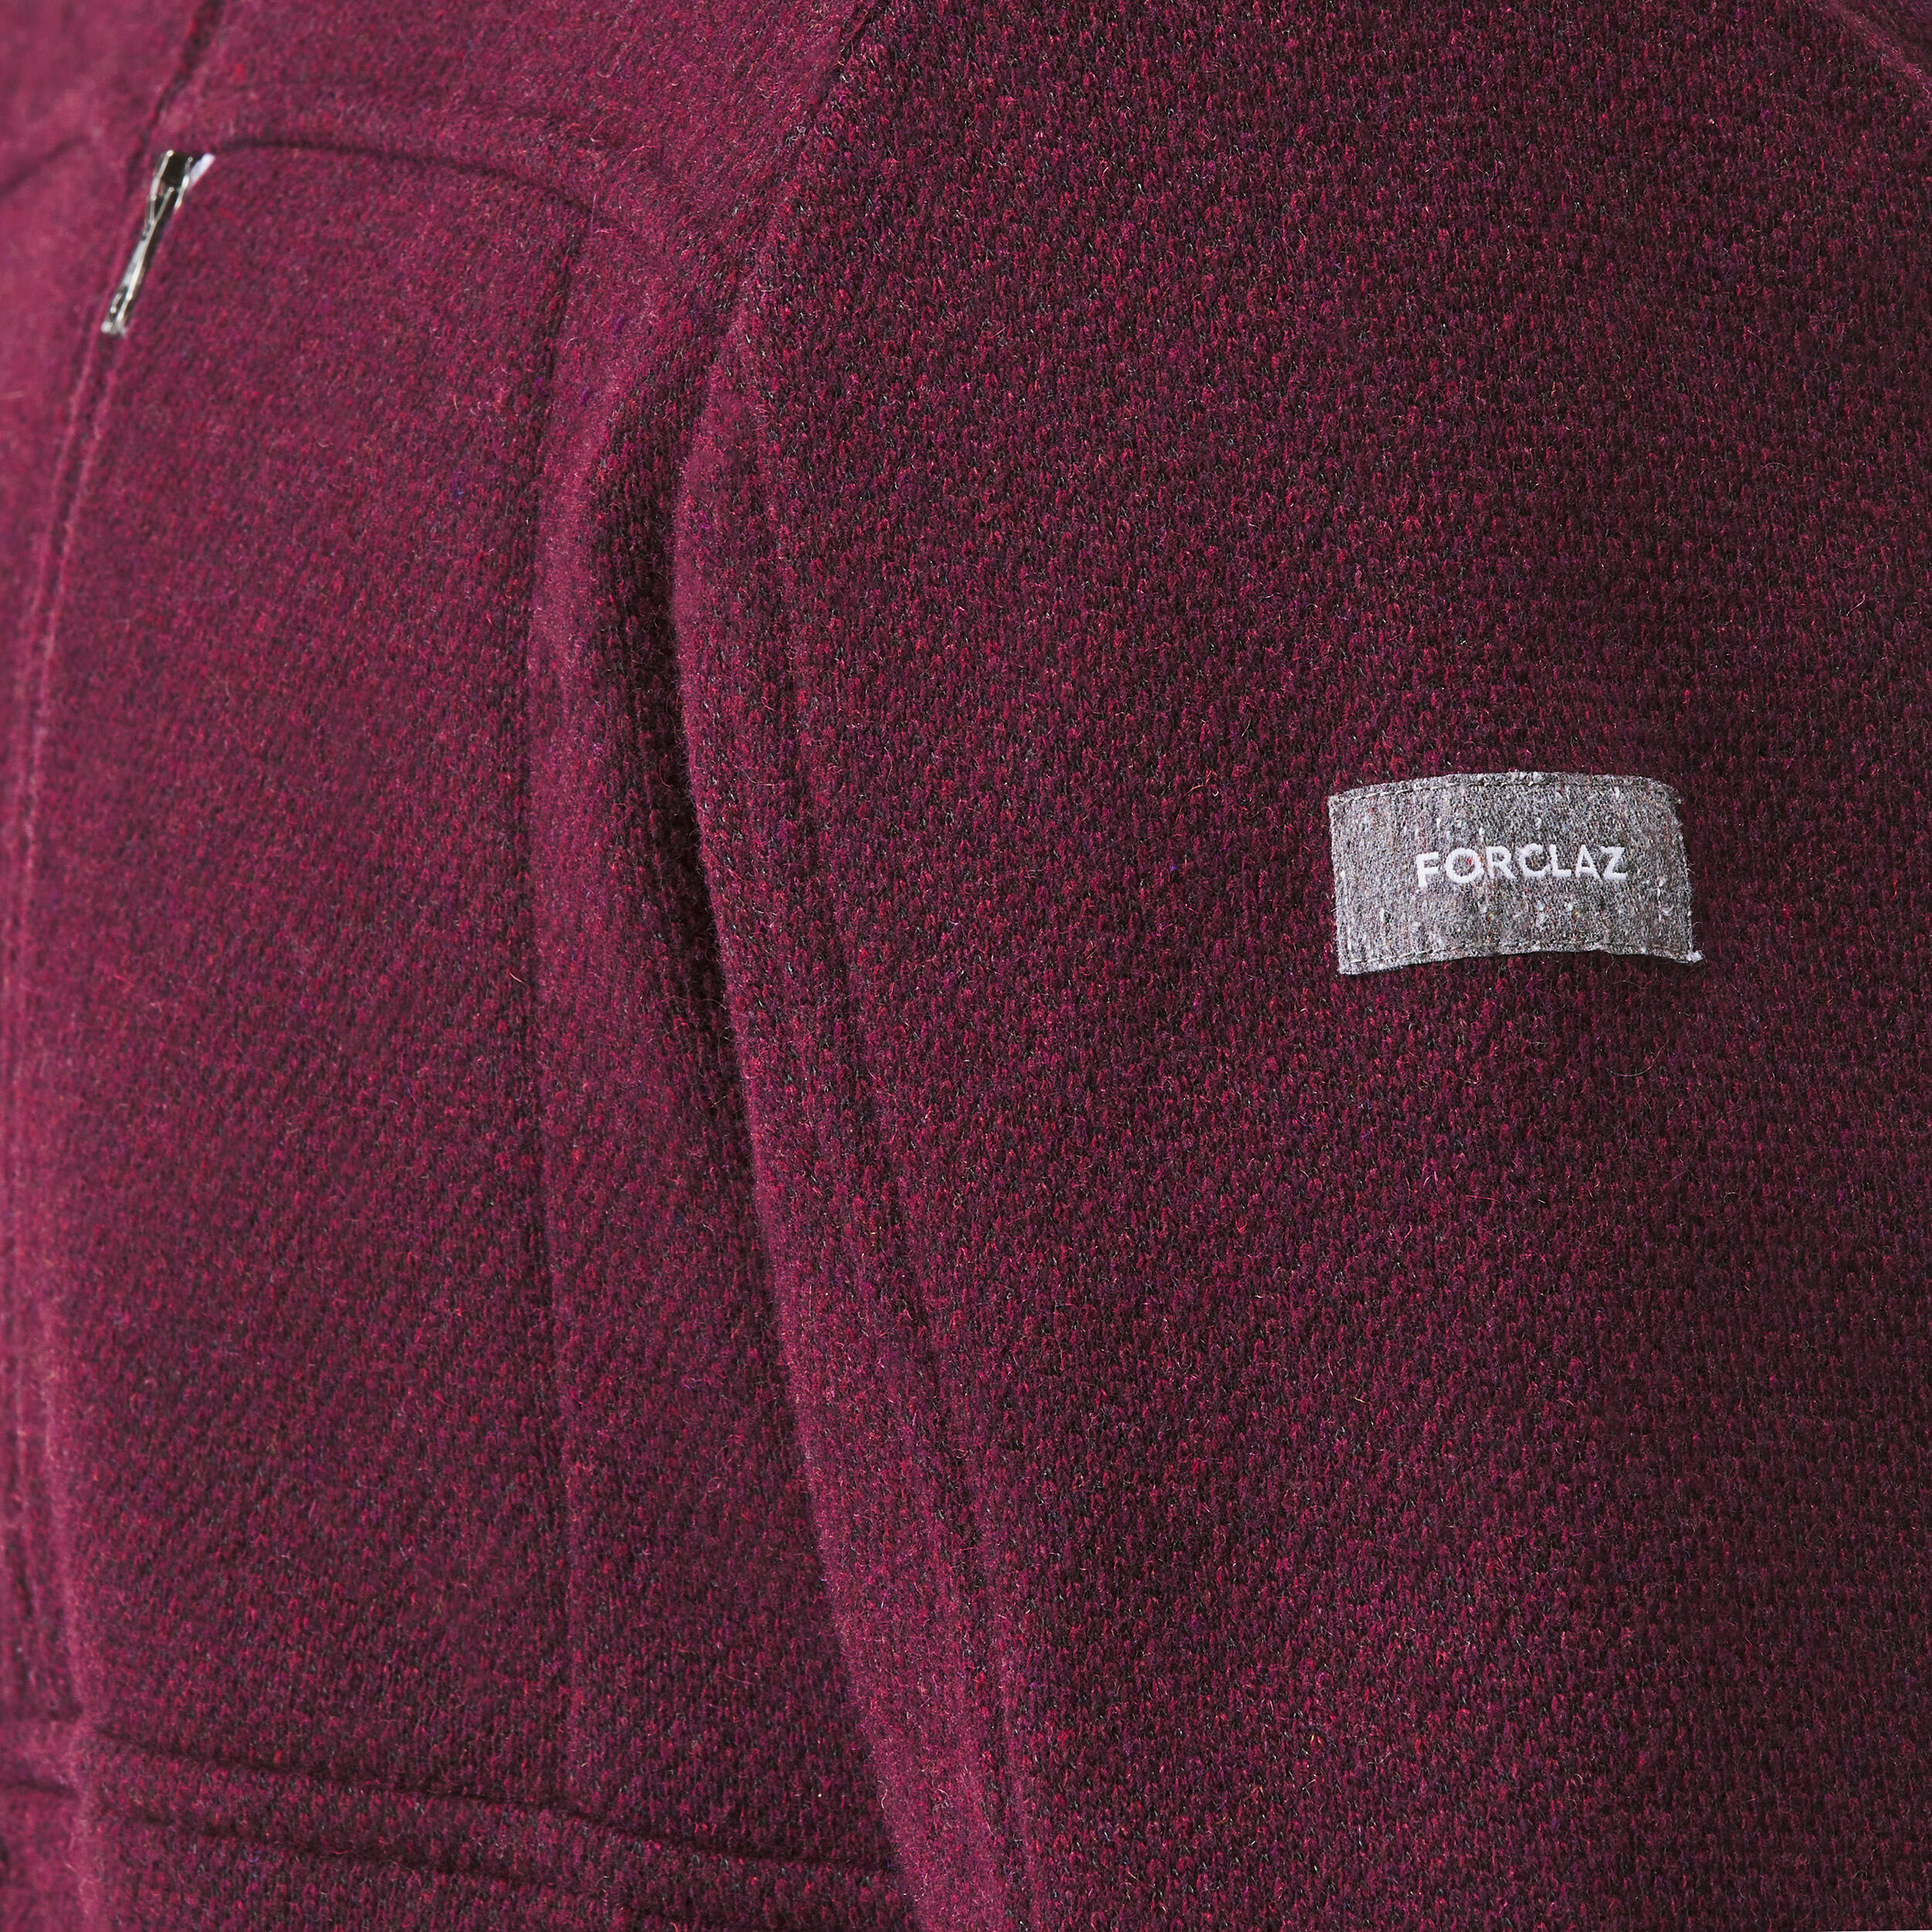 Men’s wool hooded sweatshirt - Minimal Editions Local 6/12